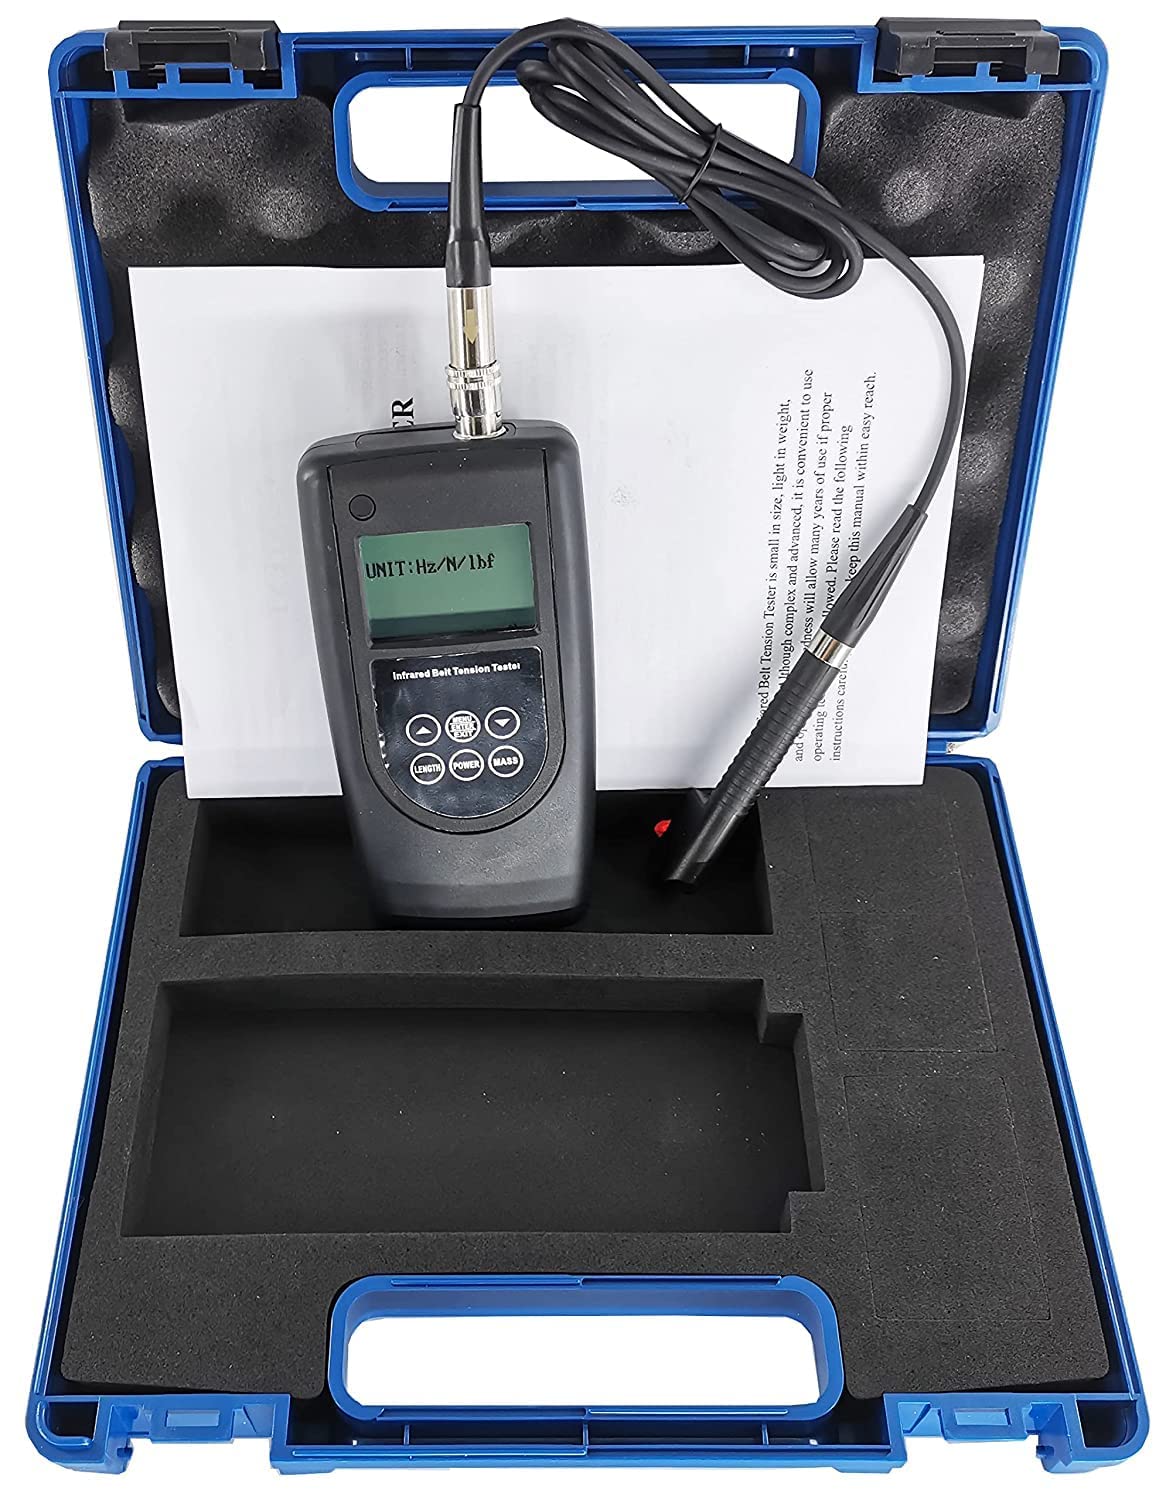 VTSYIQI Infrared Belt Tensiometer Belt Tension Tester Meter Gauge with Laser Sensor Measurement Range 10Hz~500Hz Measure Belt Tension in Motors and Other Machinery